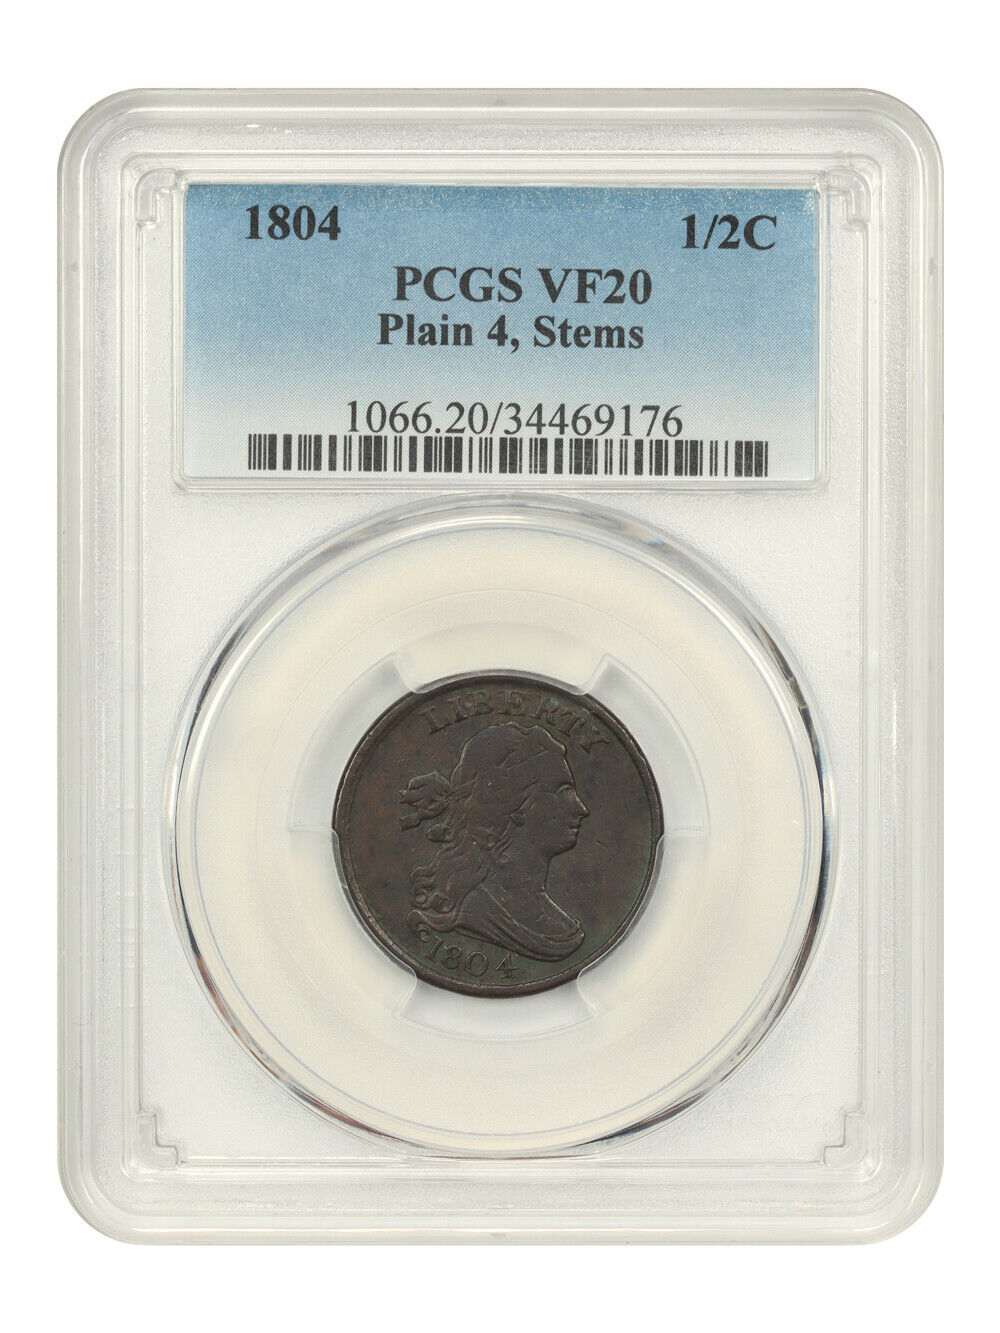 1804 1/2c PCGS VF20 (Plain 4, Stems) - Draped Bust Half Cents (1800-1808)